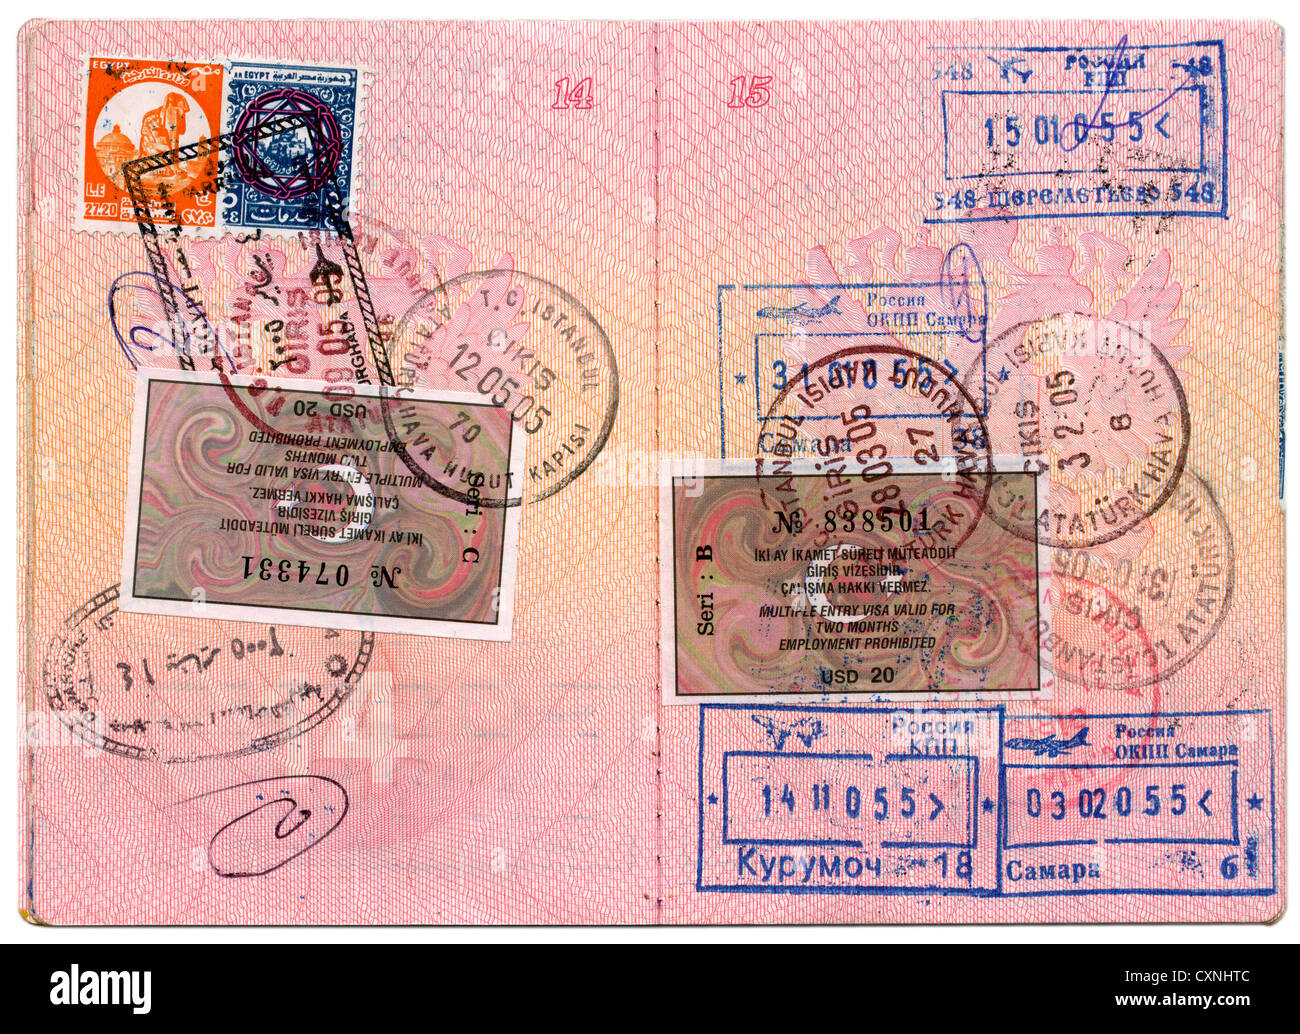 Croatian passport hi-res stock photography and images - Alamy